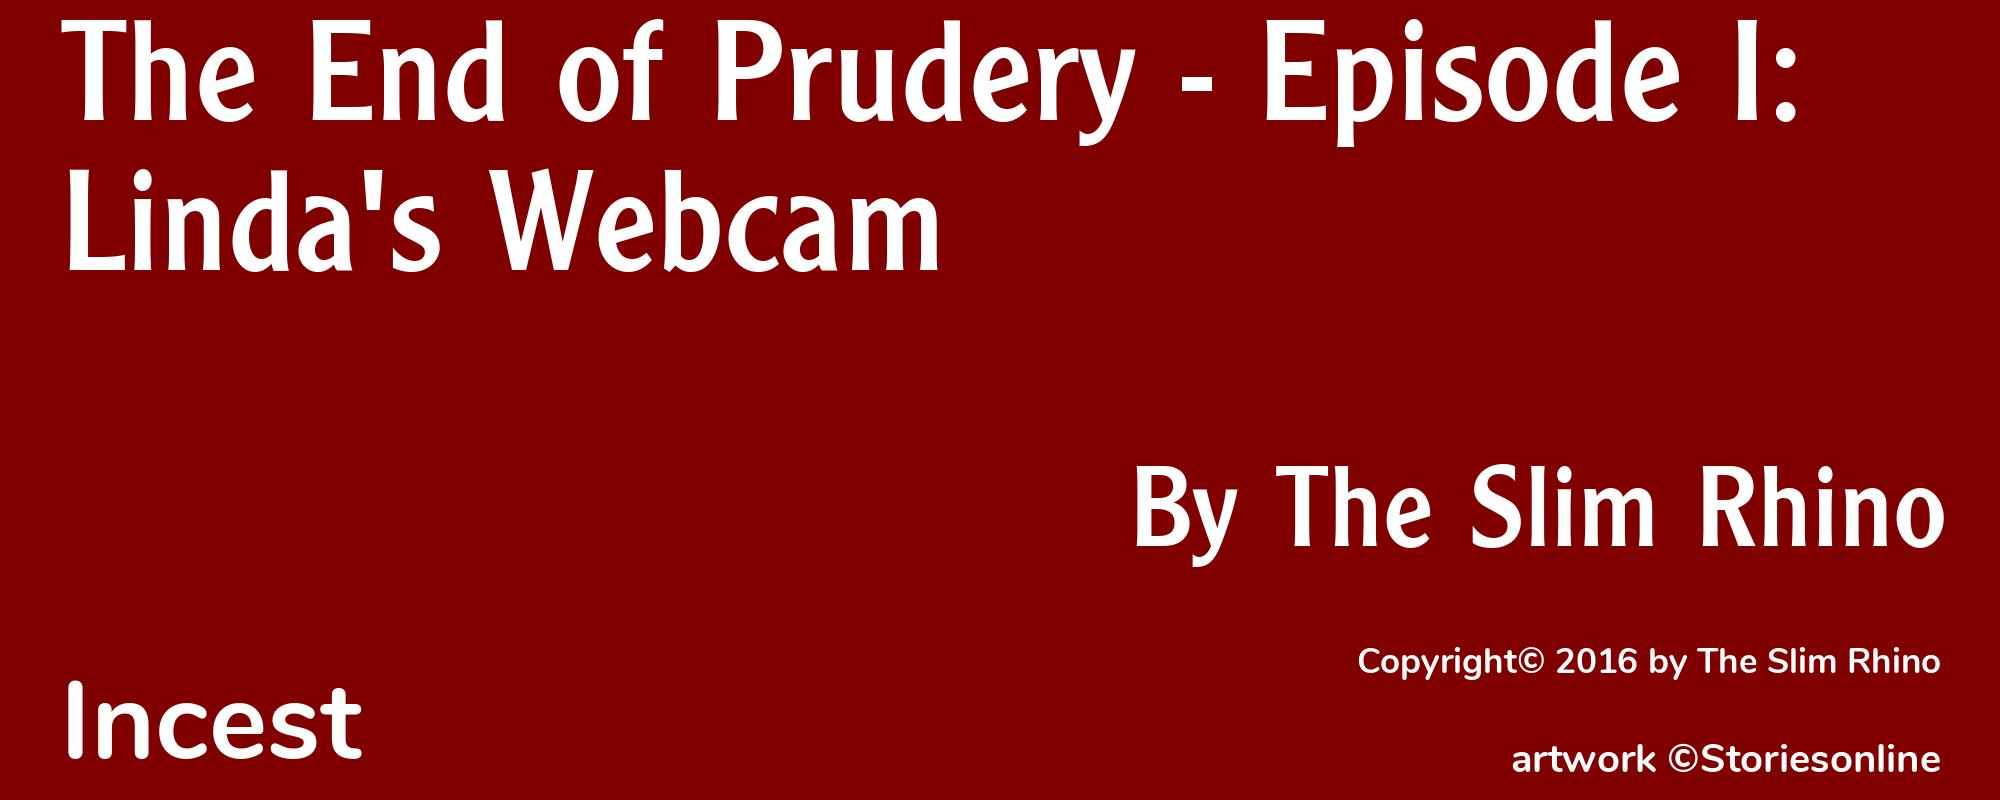 The End of Prudery - Episode I: Linda's Webcam - Cover